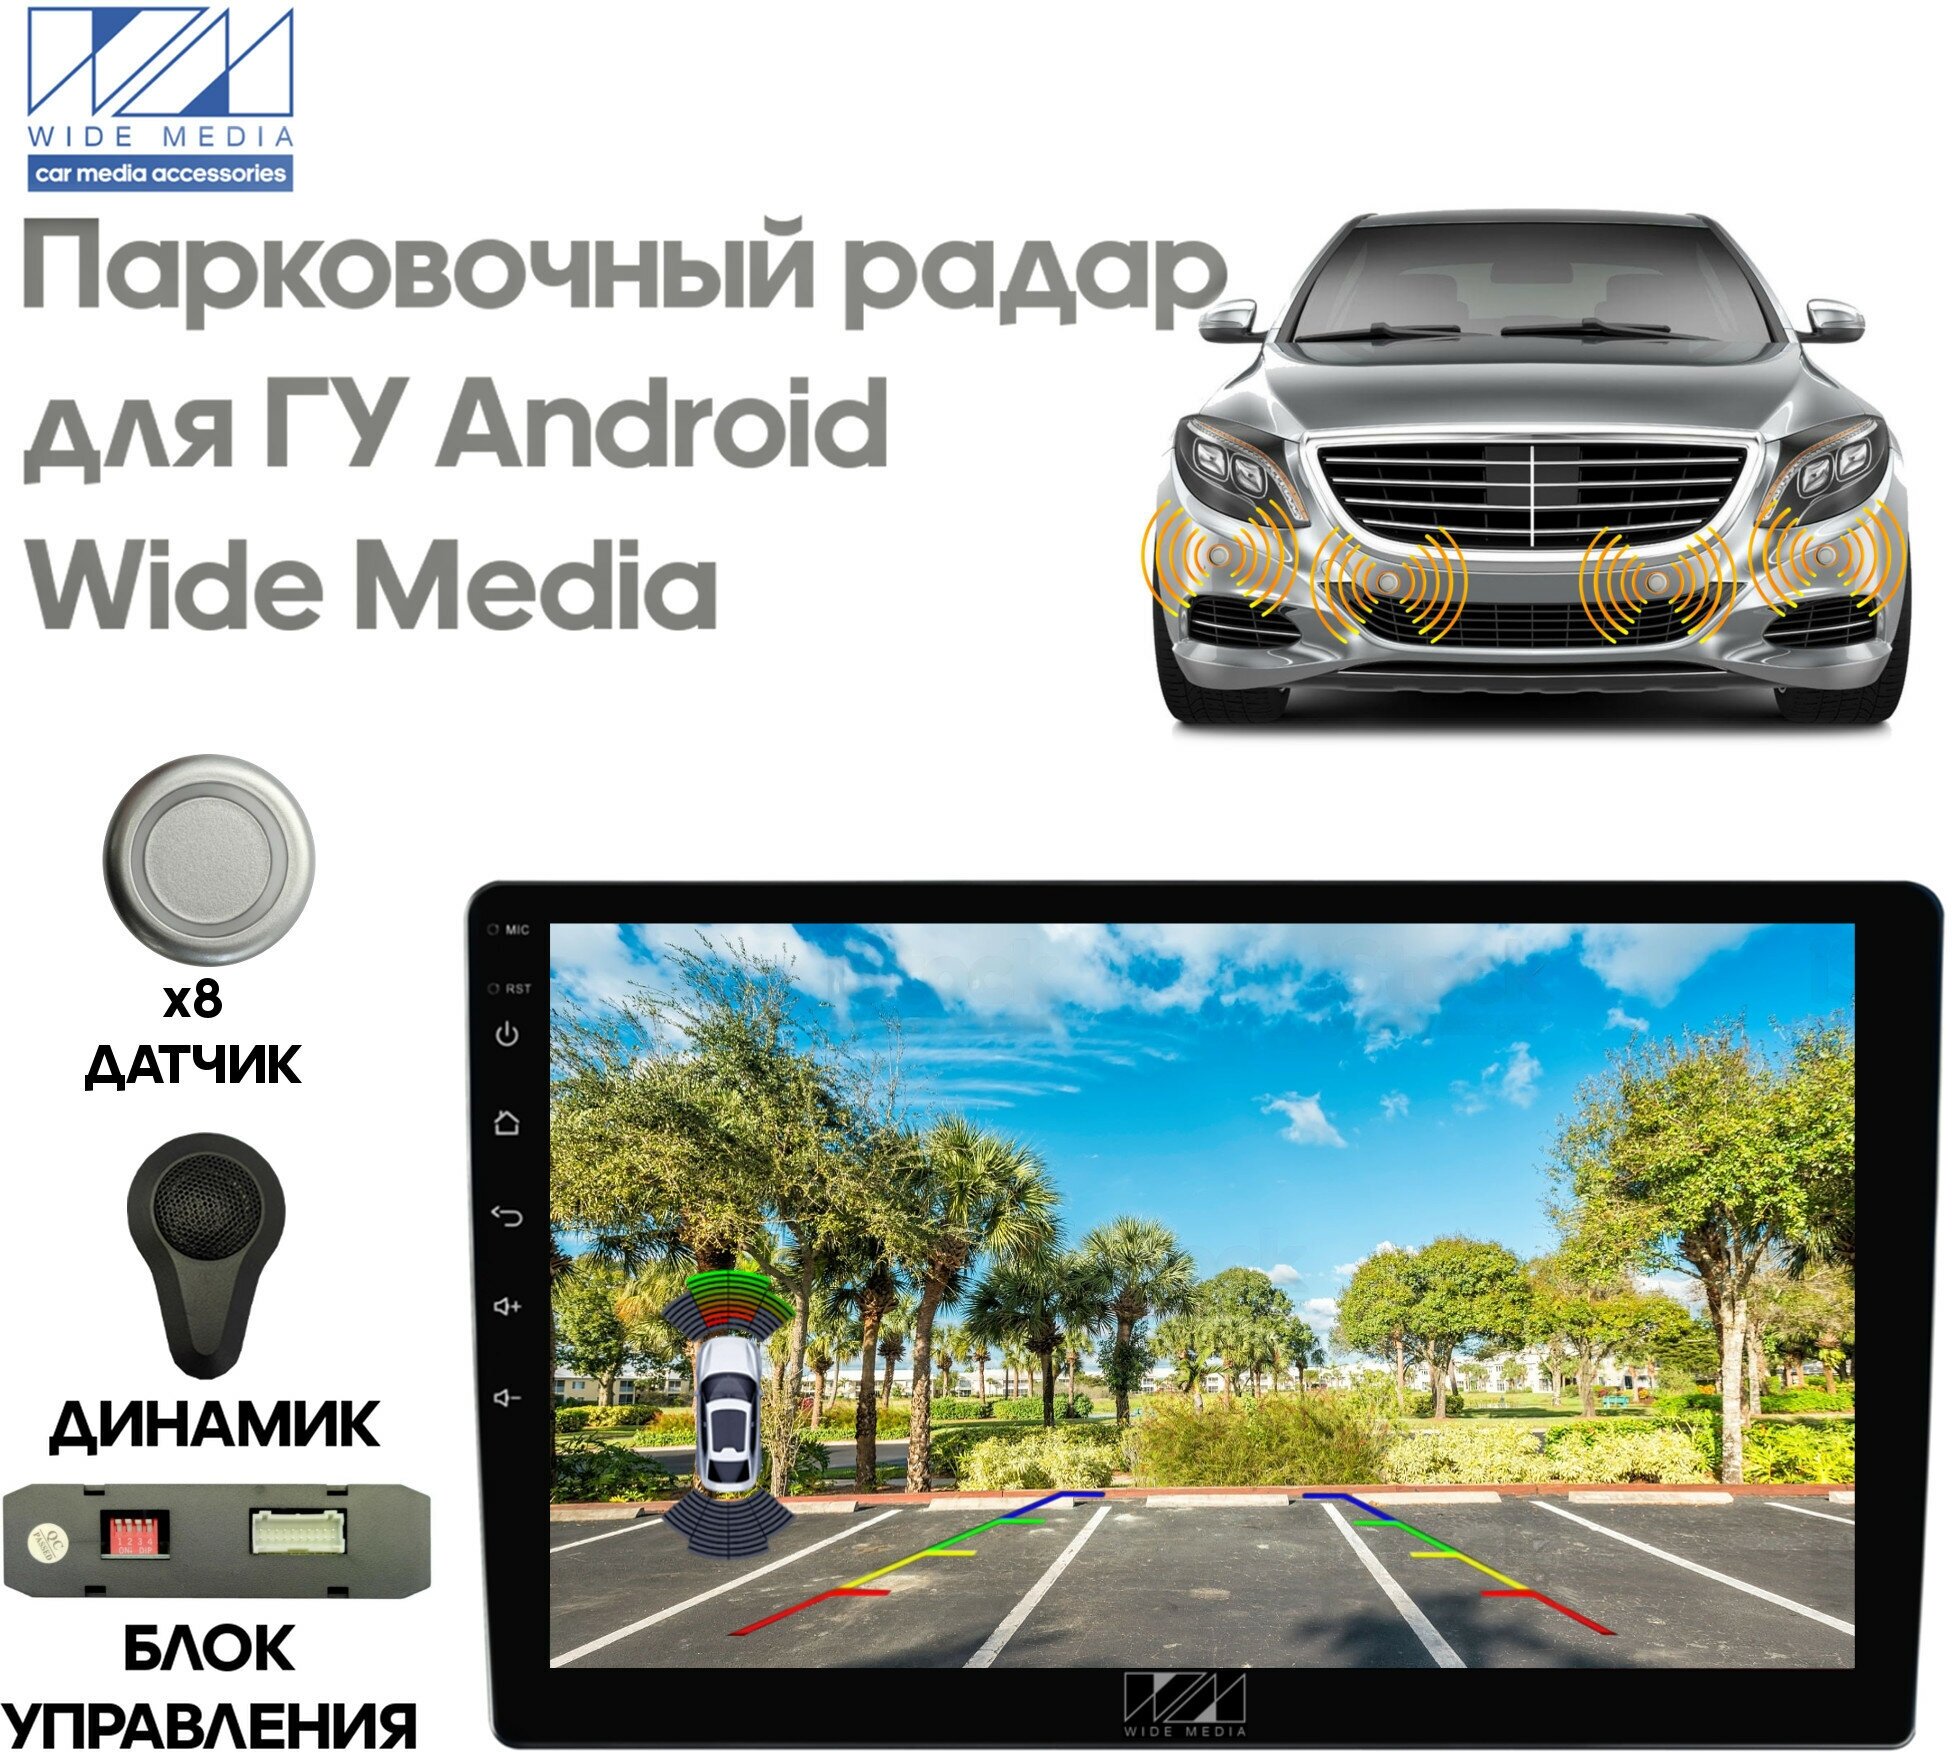 Парковочный радар Wide Media APS-118SL (для ГУ Android, 8 дат. врез, сереб.)